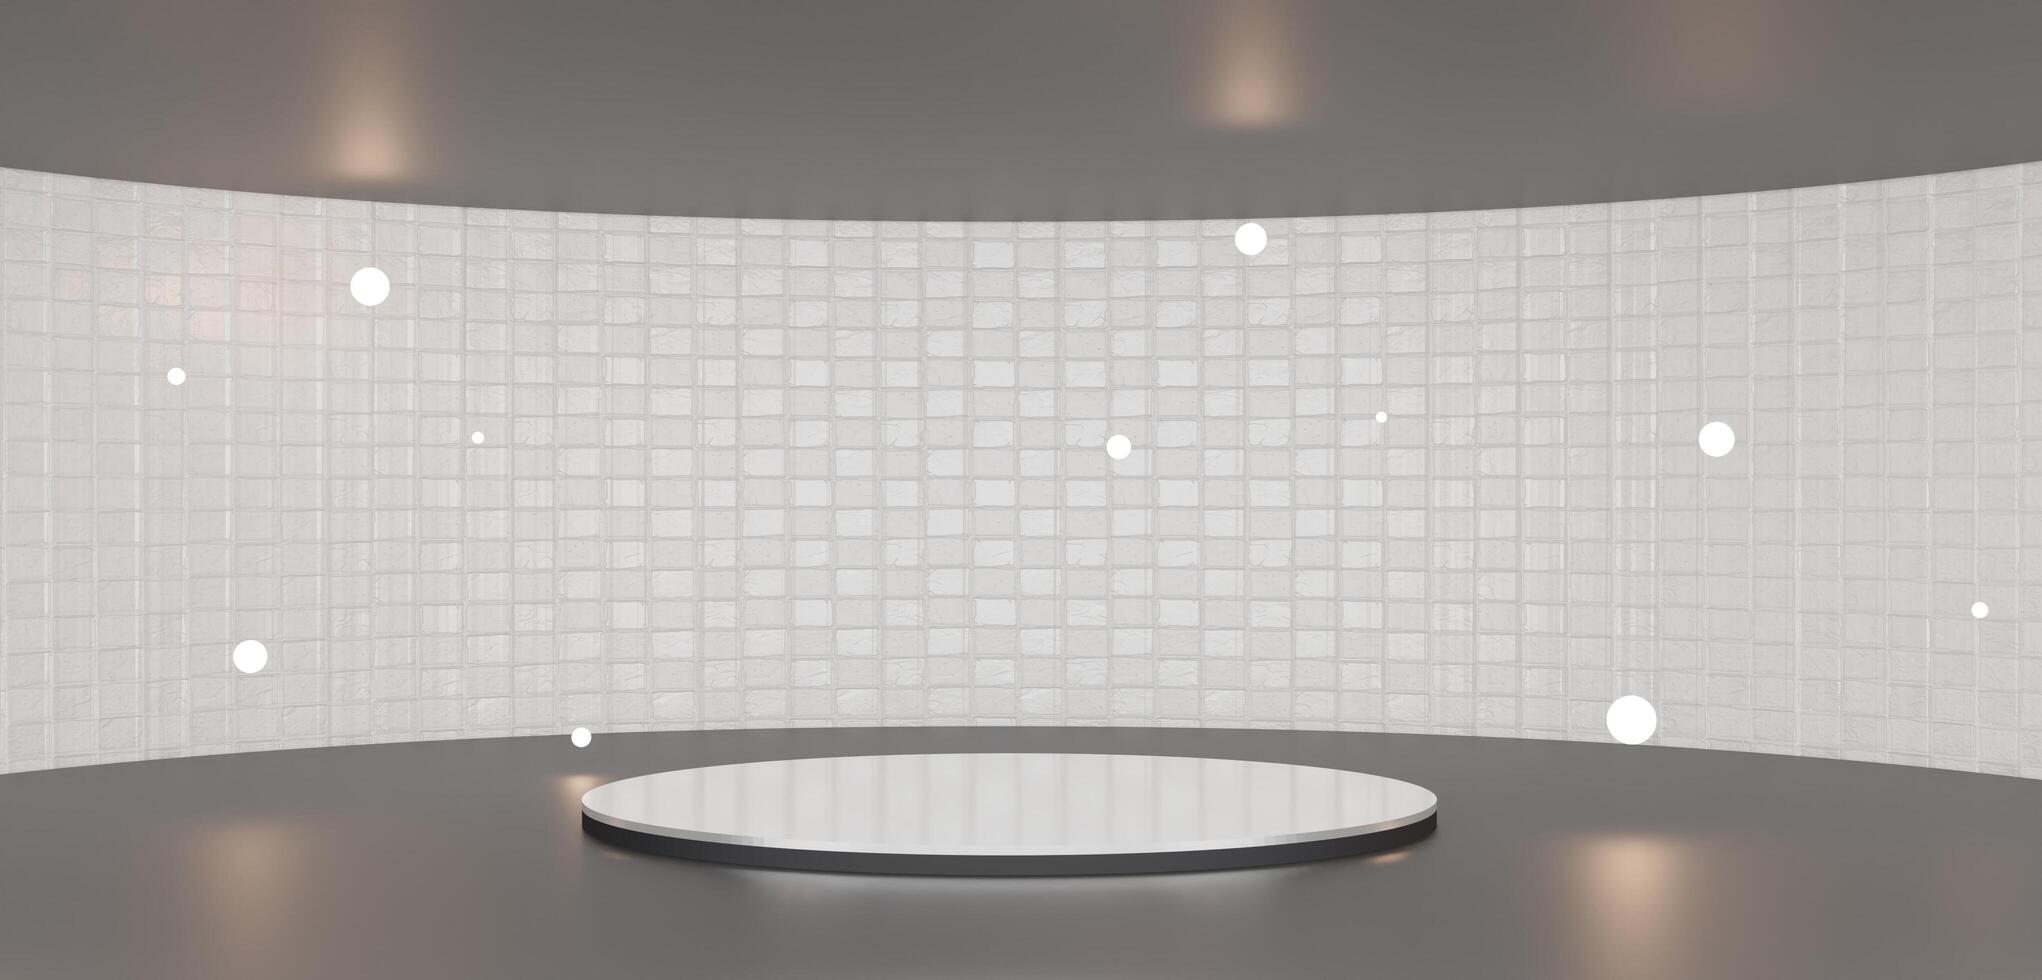 sala de exposición exposición esfera cilindro redondo curvo pantalla redondo pedestal 3d ilustración foto